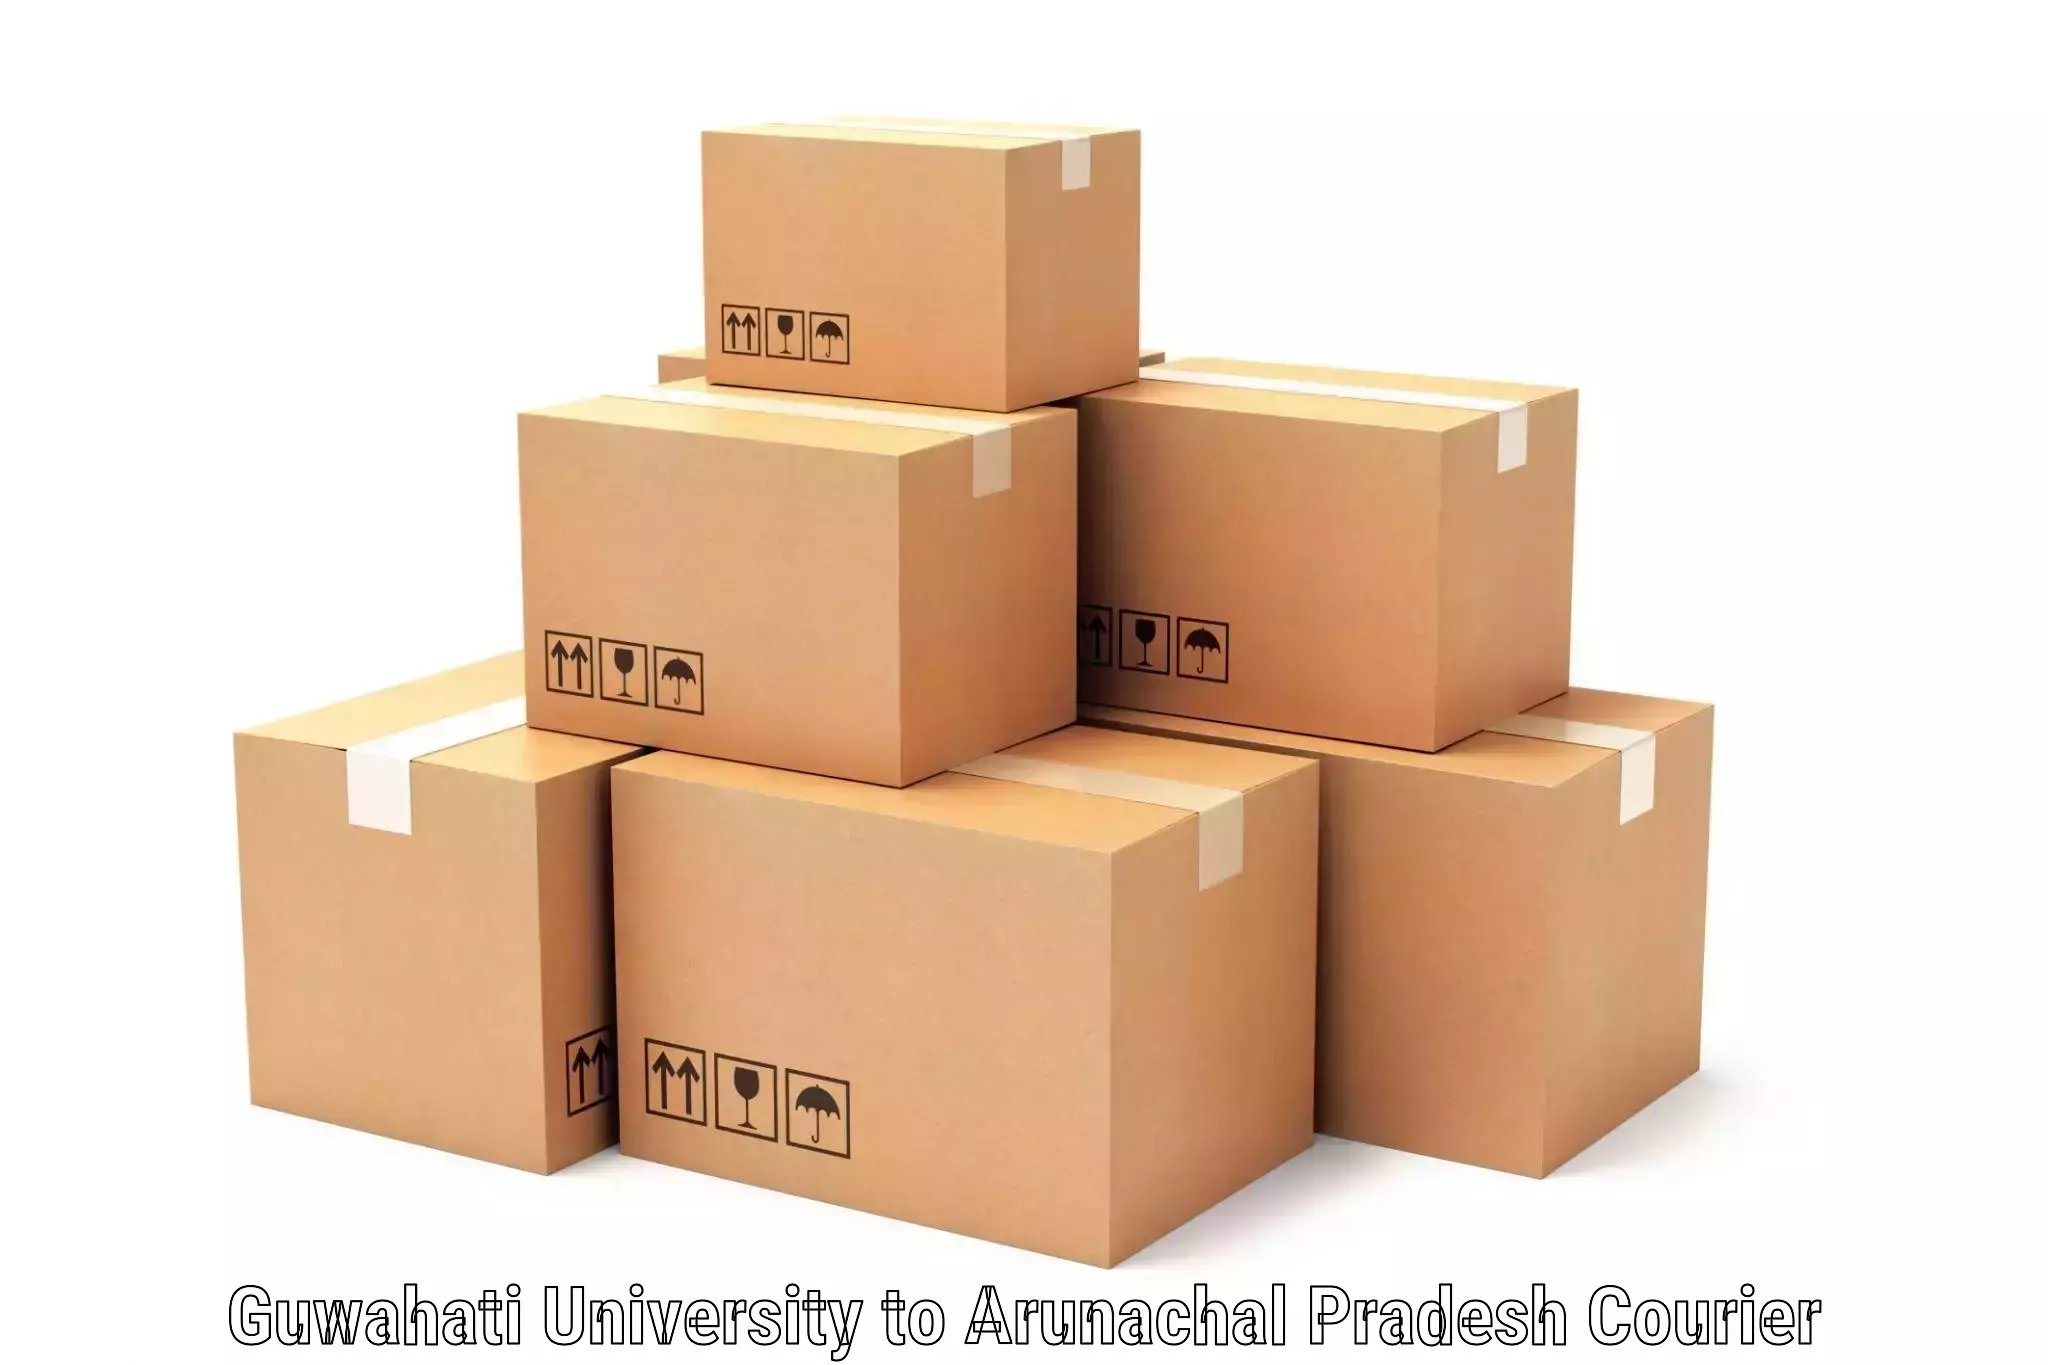 Package delivery network Guwahati University to Lower Subansiri